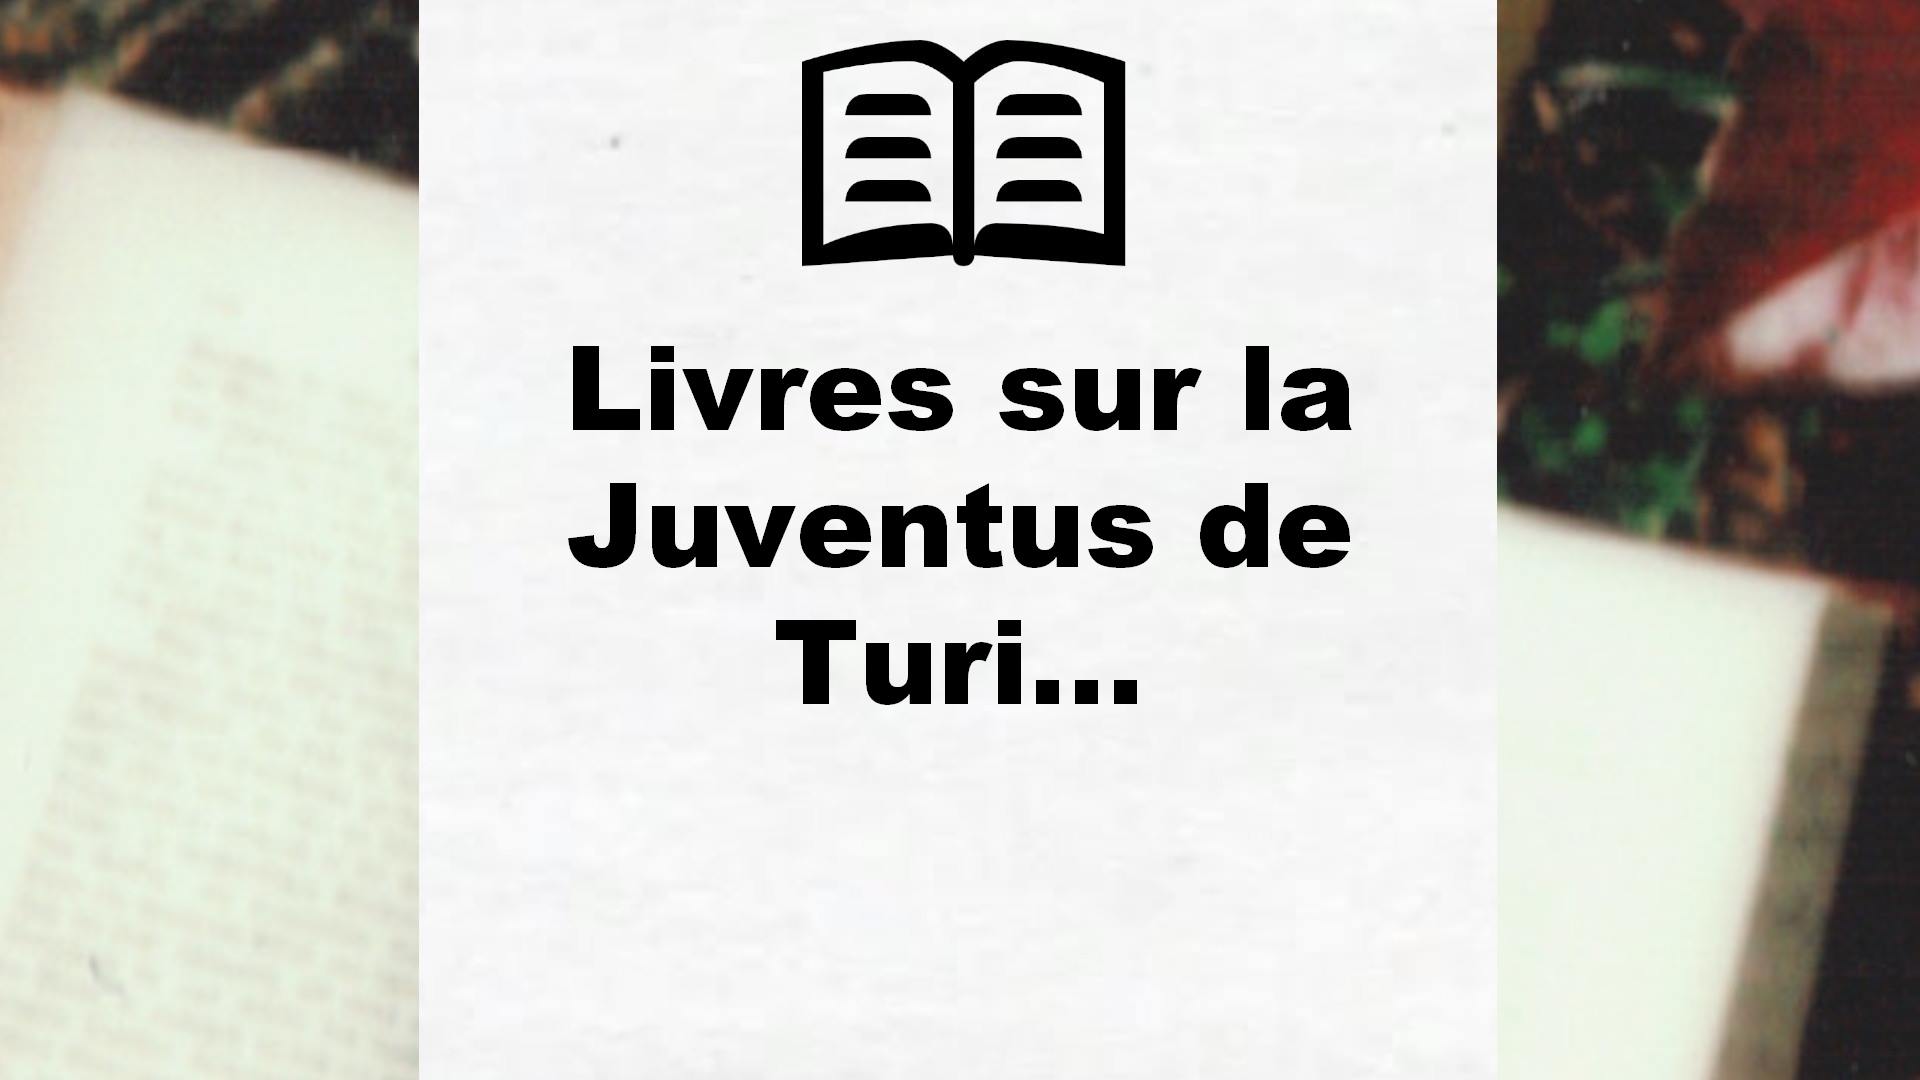 Livres sur la Juventus de Turin